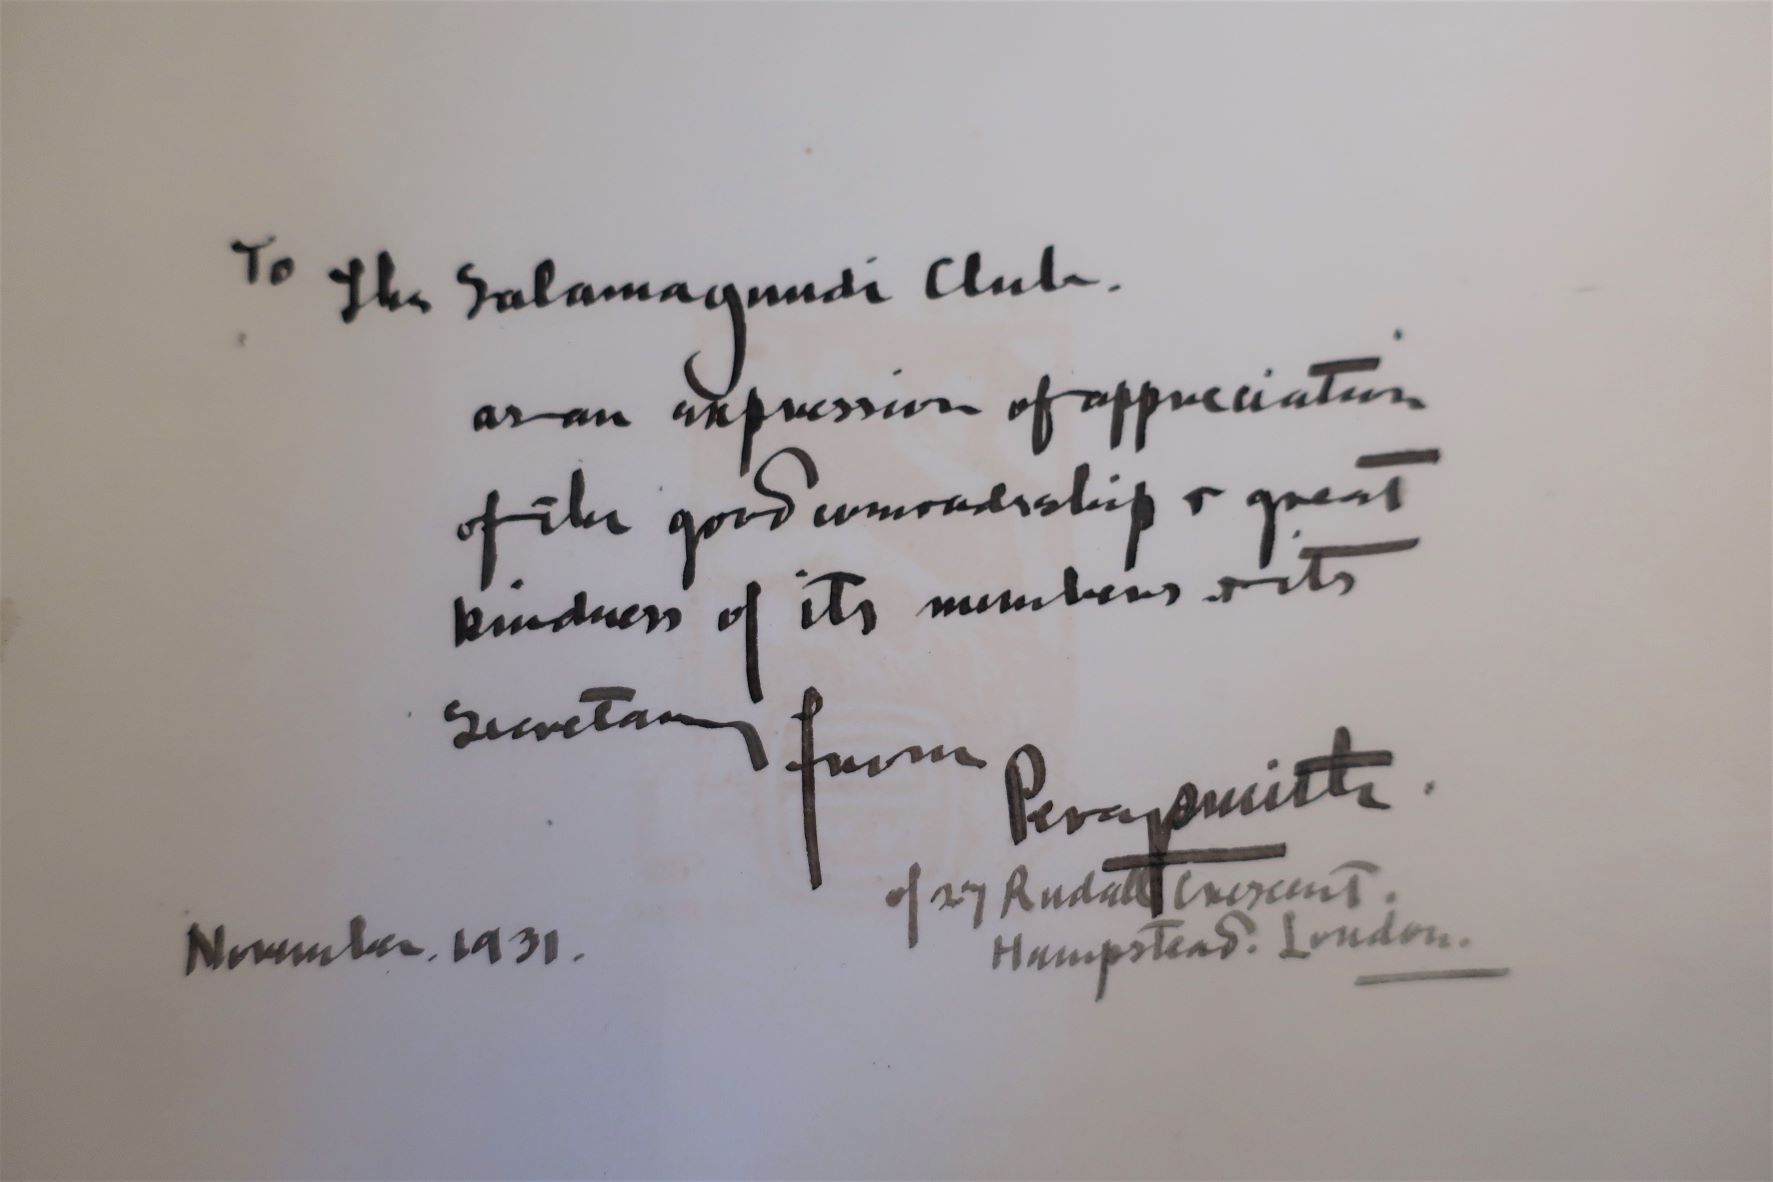 Handwriting, addressed to the Salmagundi Club by Percy Smith.